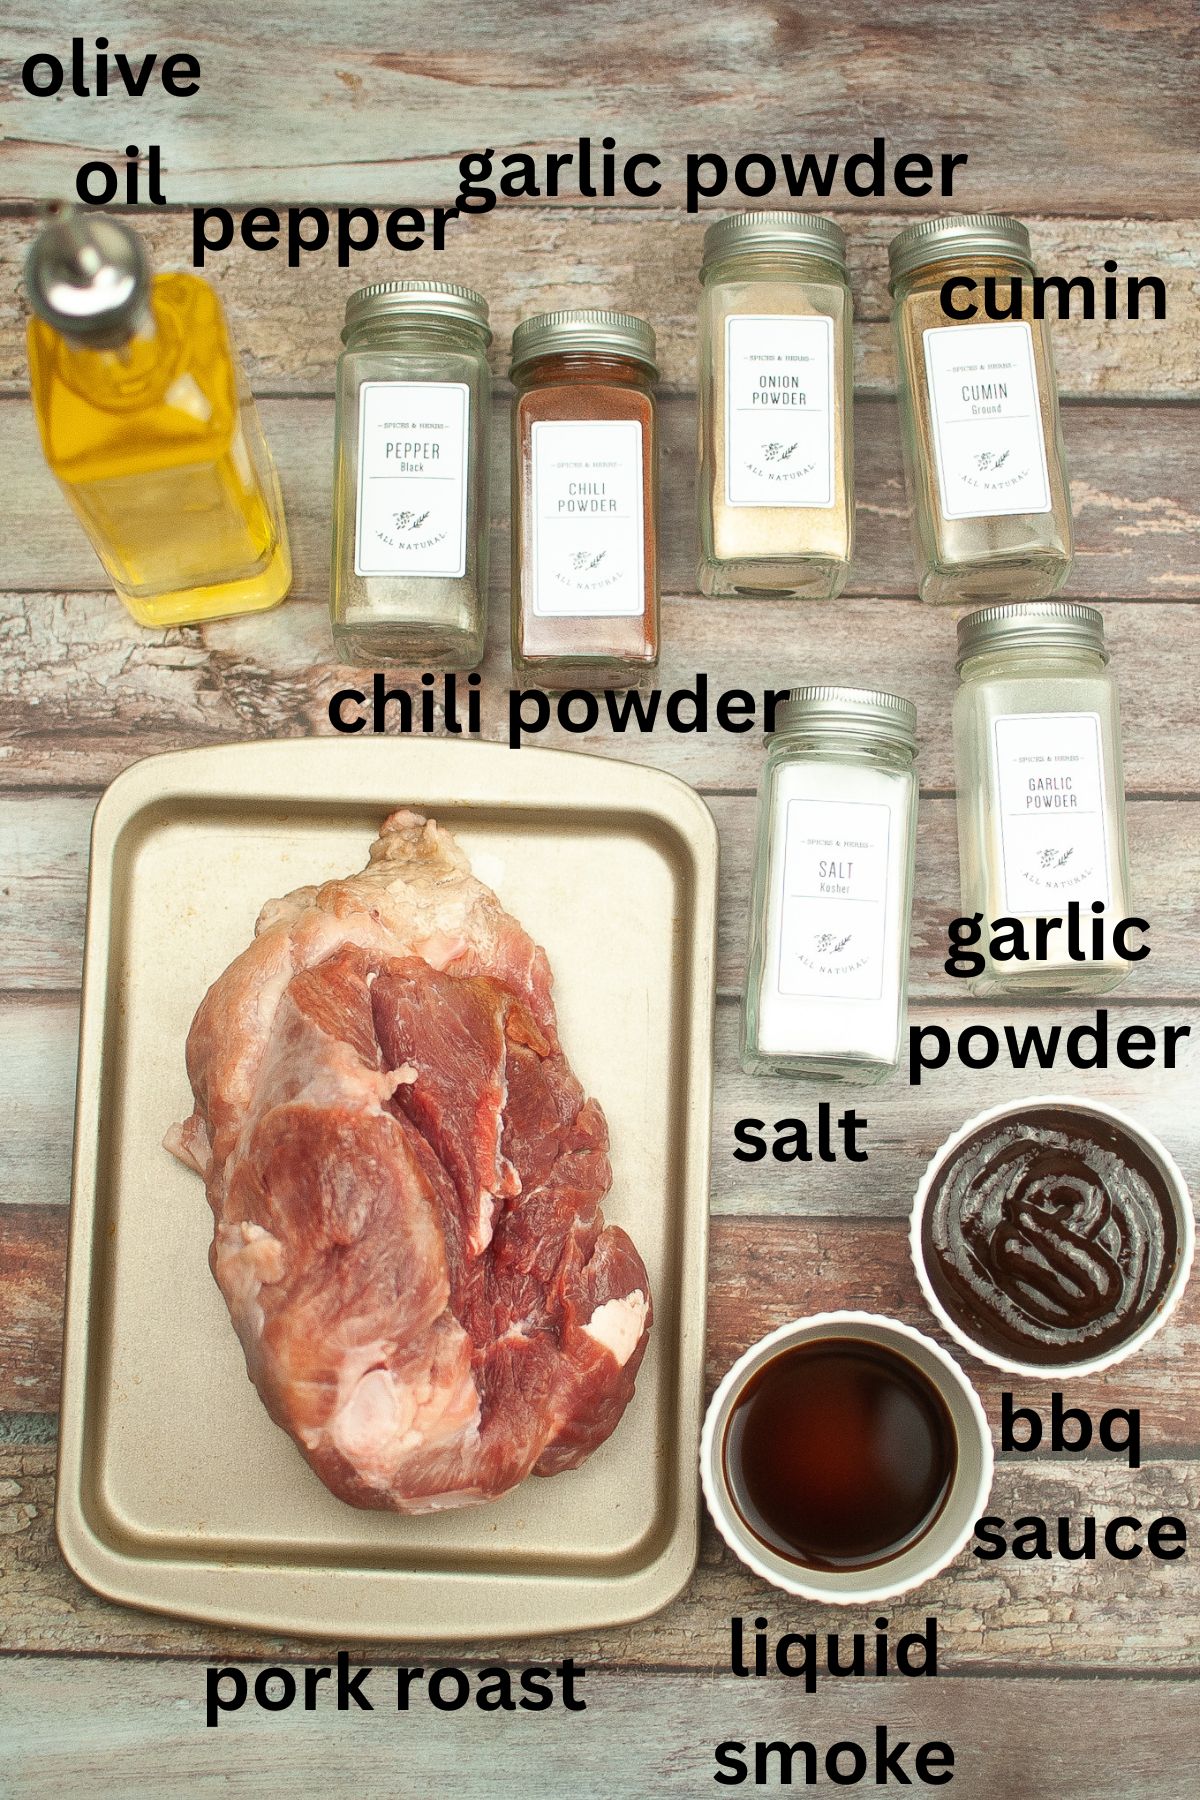 olive oil, pepper, garlic powder, cumin, chili powder, salt, garlic powder, bbq sauce, liquid smoke and pork roast on a wooden background